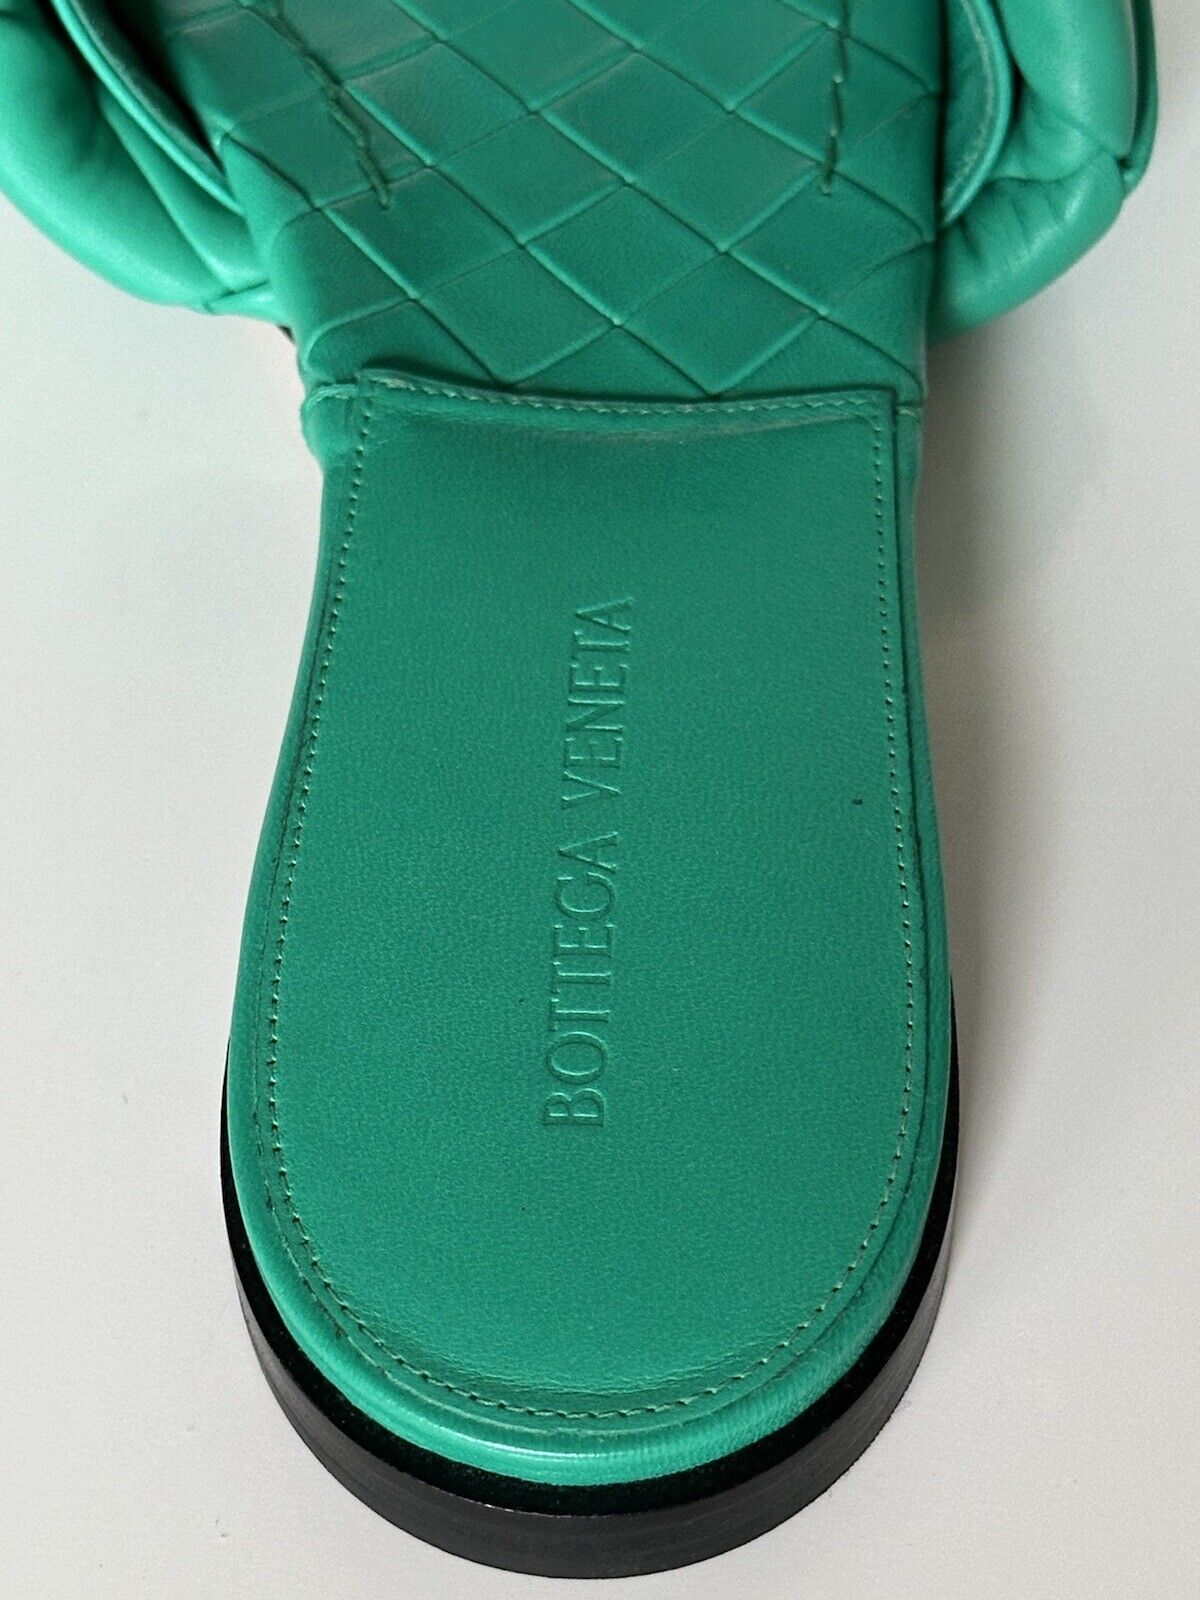 NWT 1350 долларов США Bottega Veneta Green Loden Сандалии на плоской подошве Туфли 8 США (38 евро) 608853 